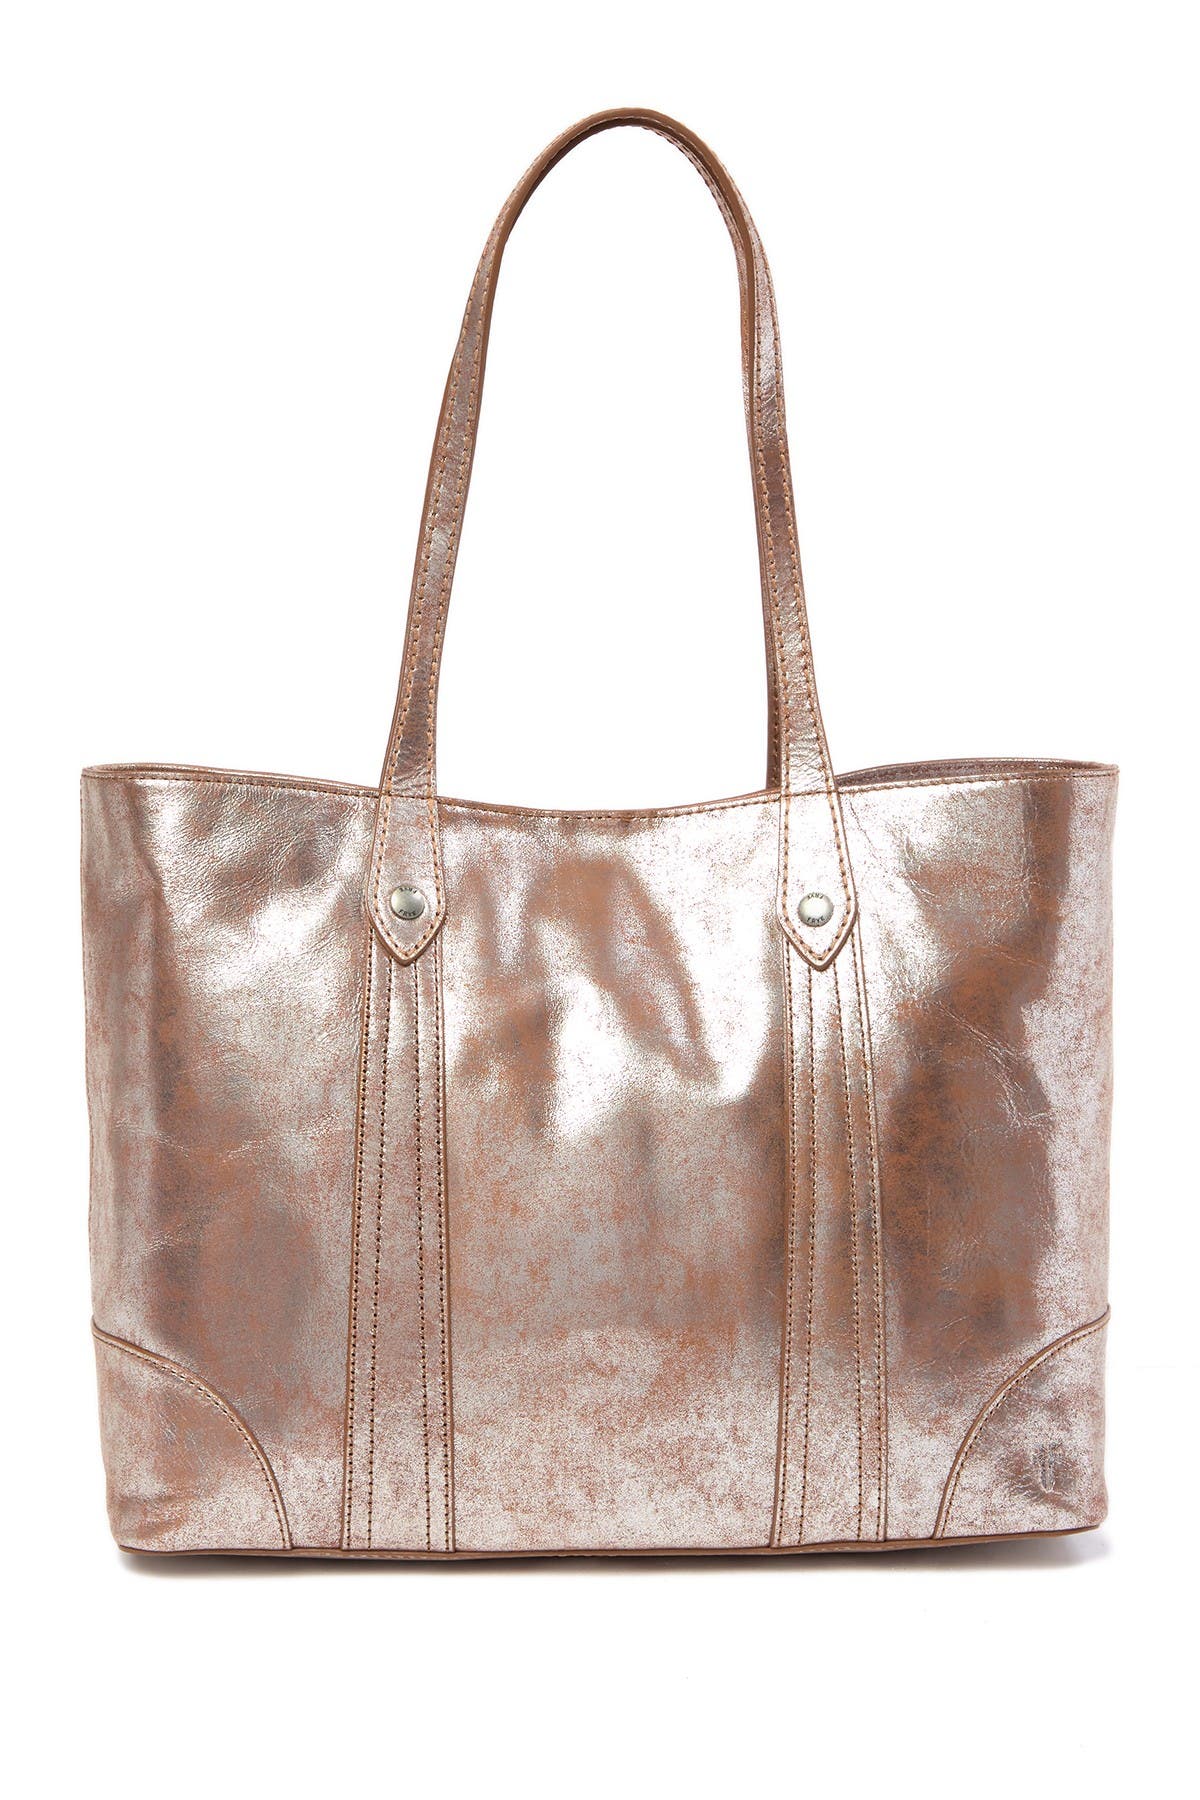 Frye | Melissa Leather Shopper Tote Bag 